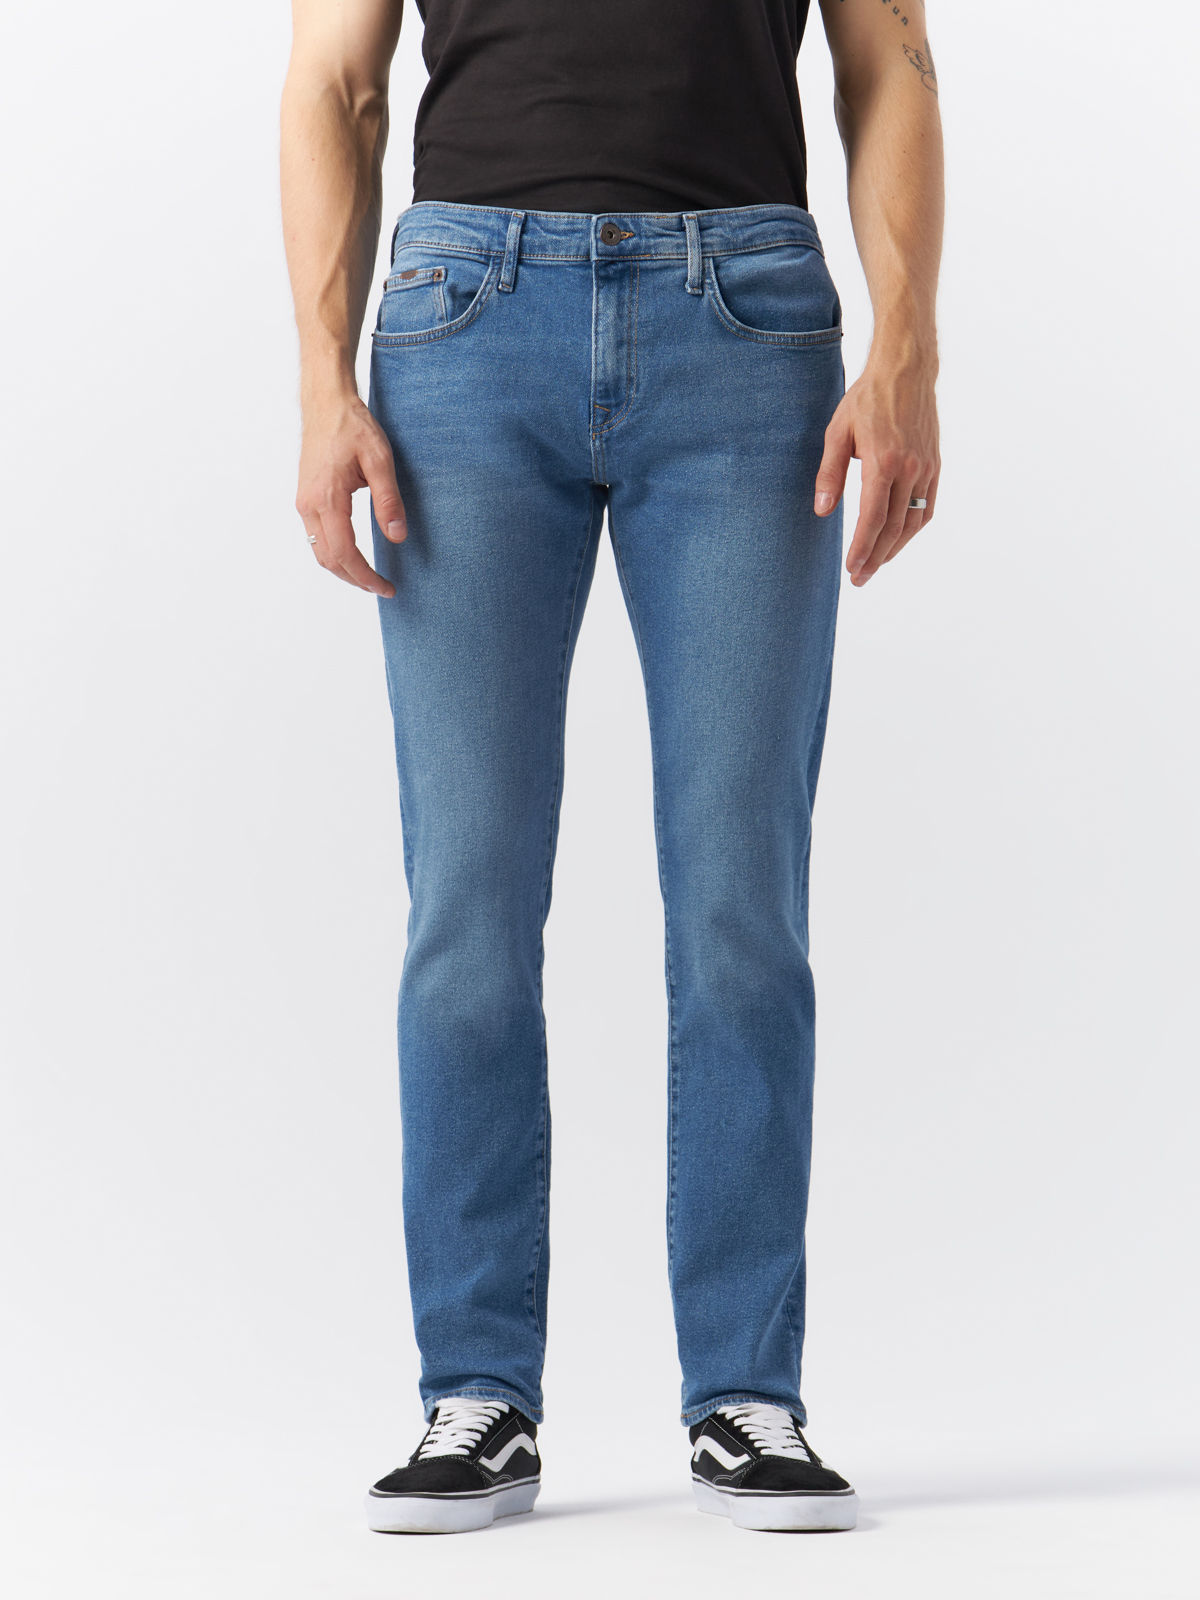 Джинсы Cross Jeans для мужчин, F 152-134, размер 31-32, синие